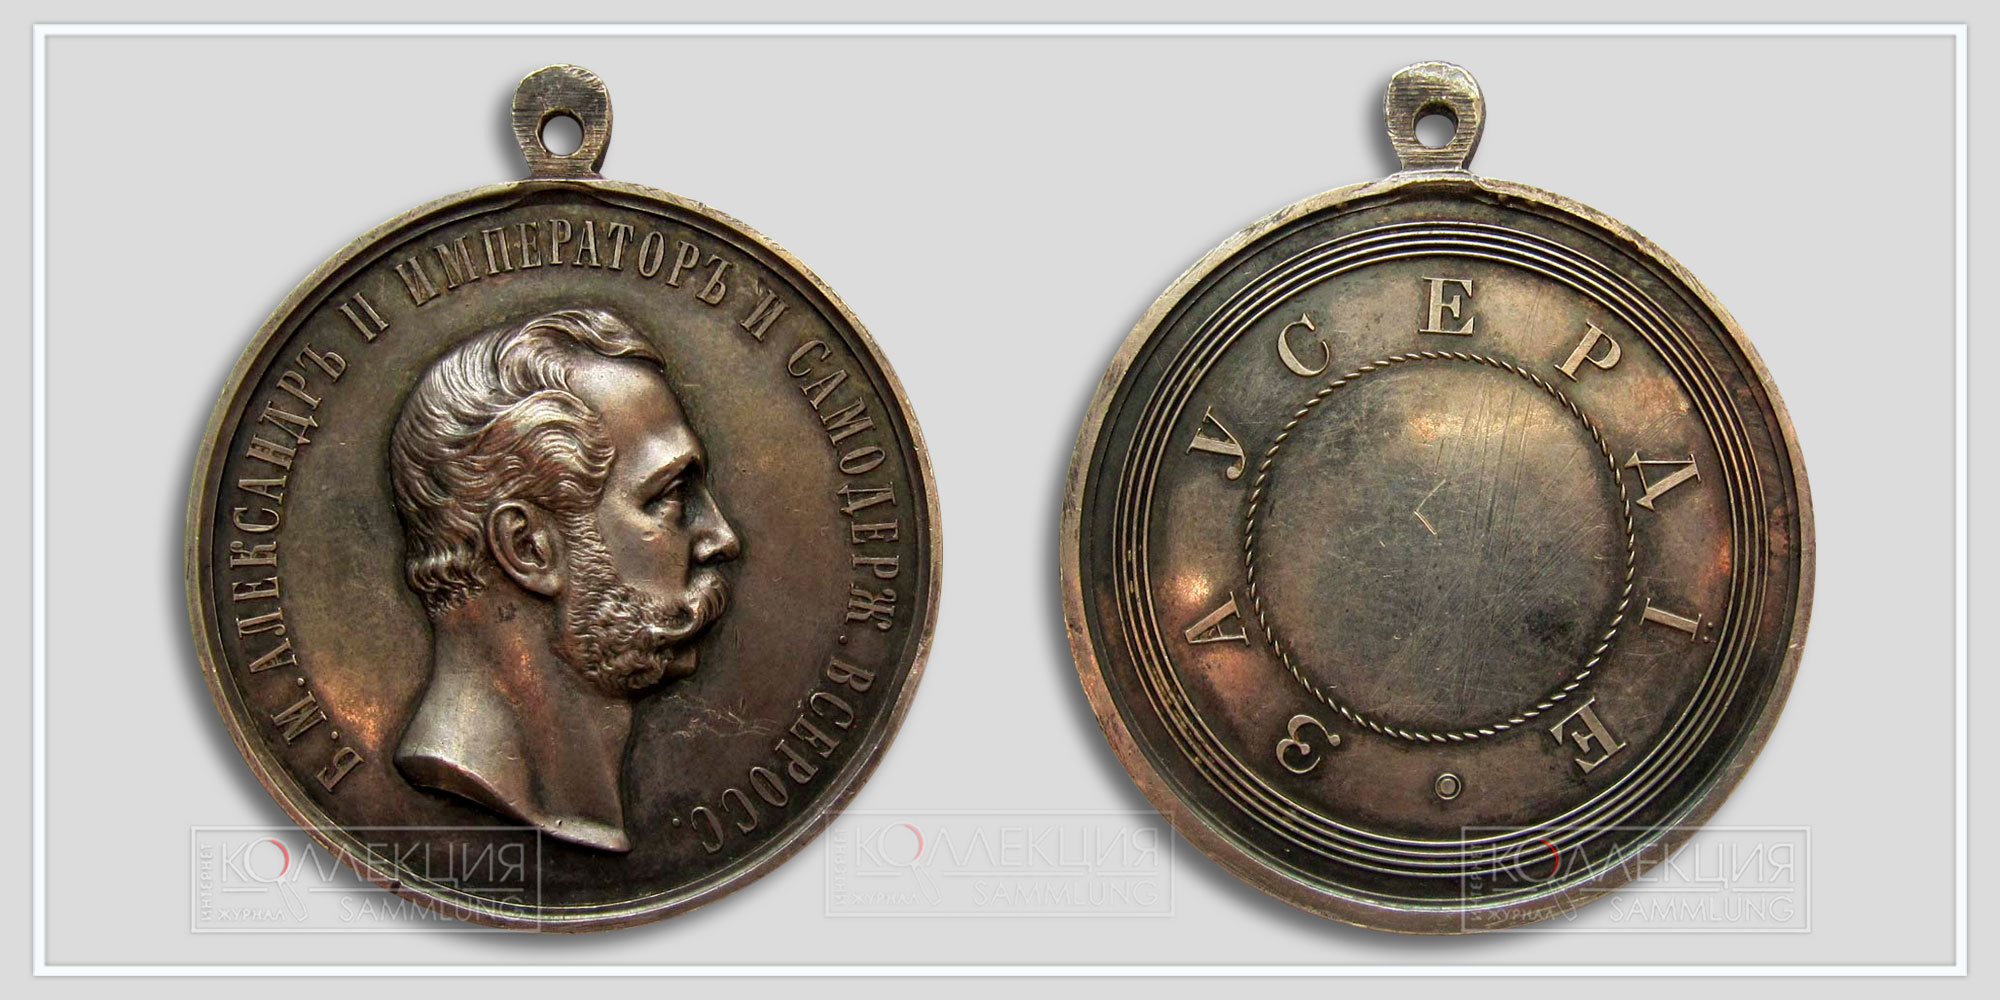 Медаль «За усердие» Александр II (шейная) Диаметр 50,7 мм Вес 55,4 г На реверсе надпись "В. Кузин" (Из архива Фалеристика.инфо. Разметил коллега Сибирякъ)